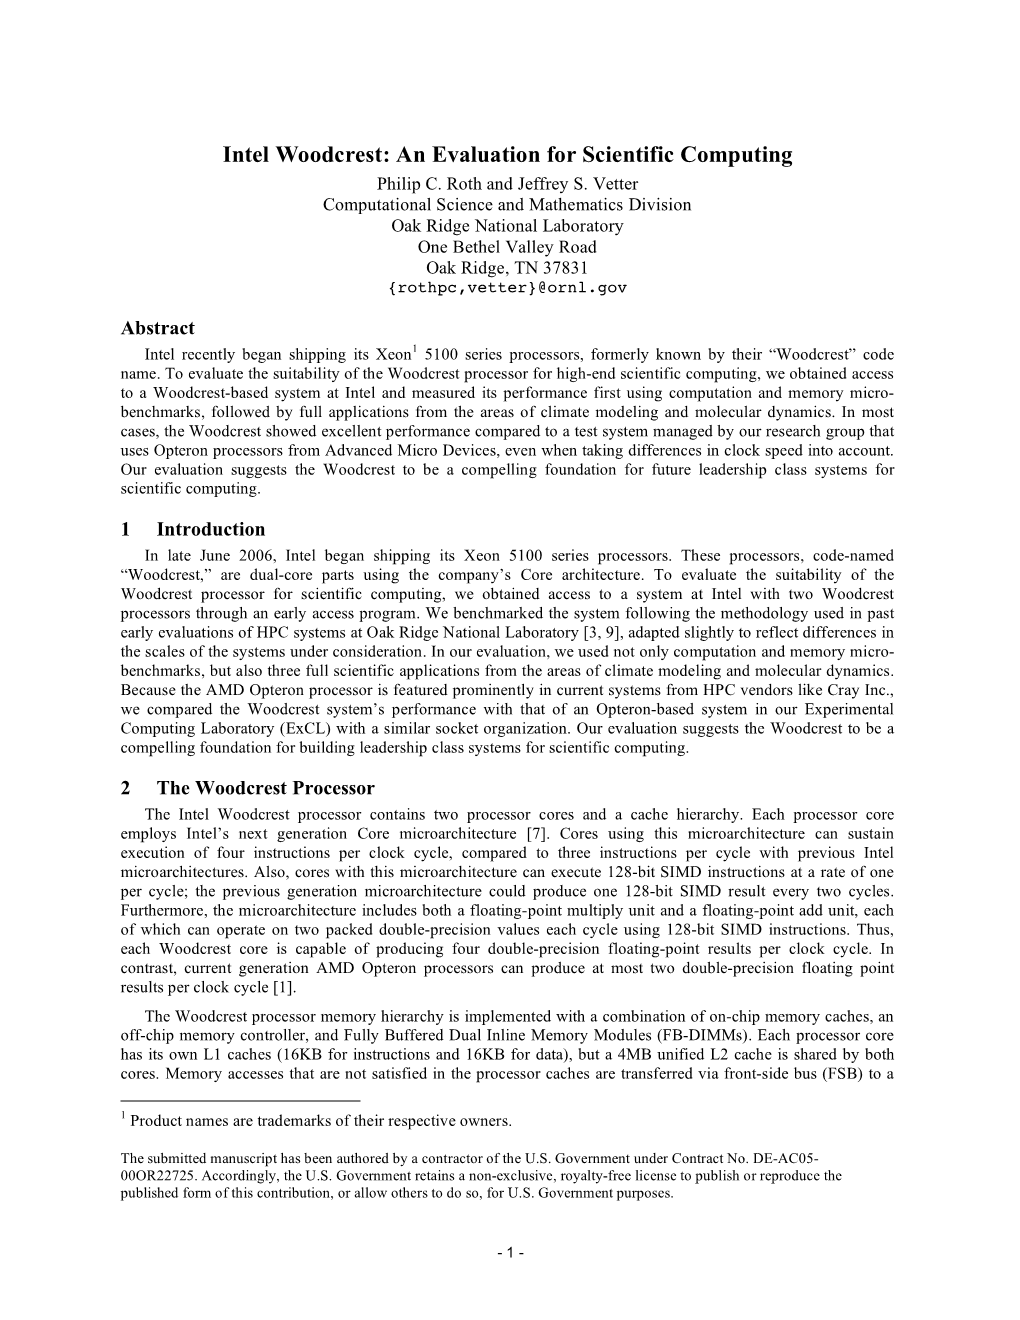 Intel Woodcrest: an Evaluation for Scientific Computing Philip C